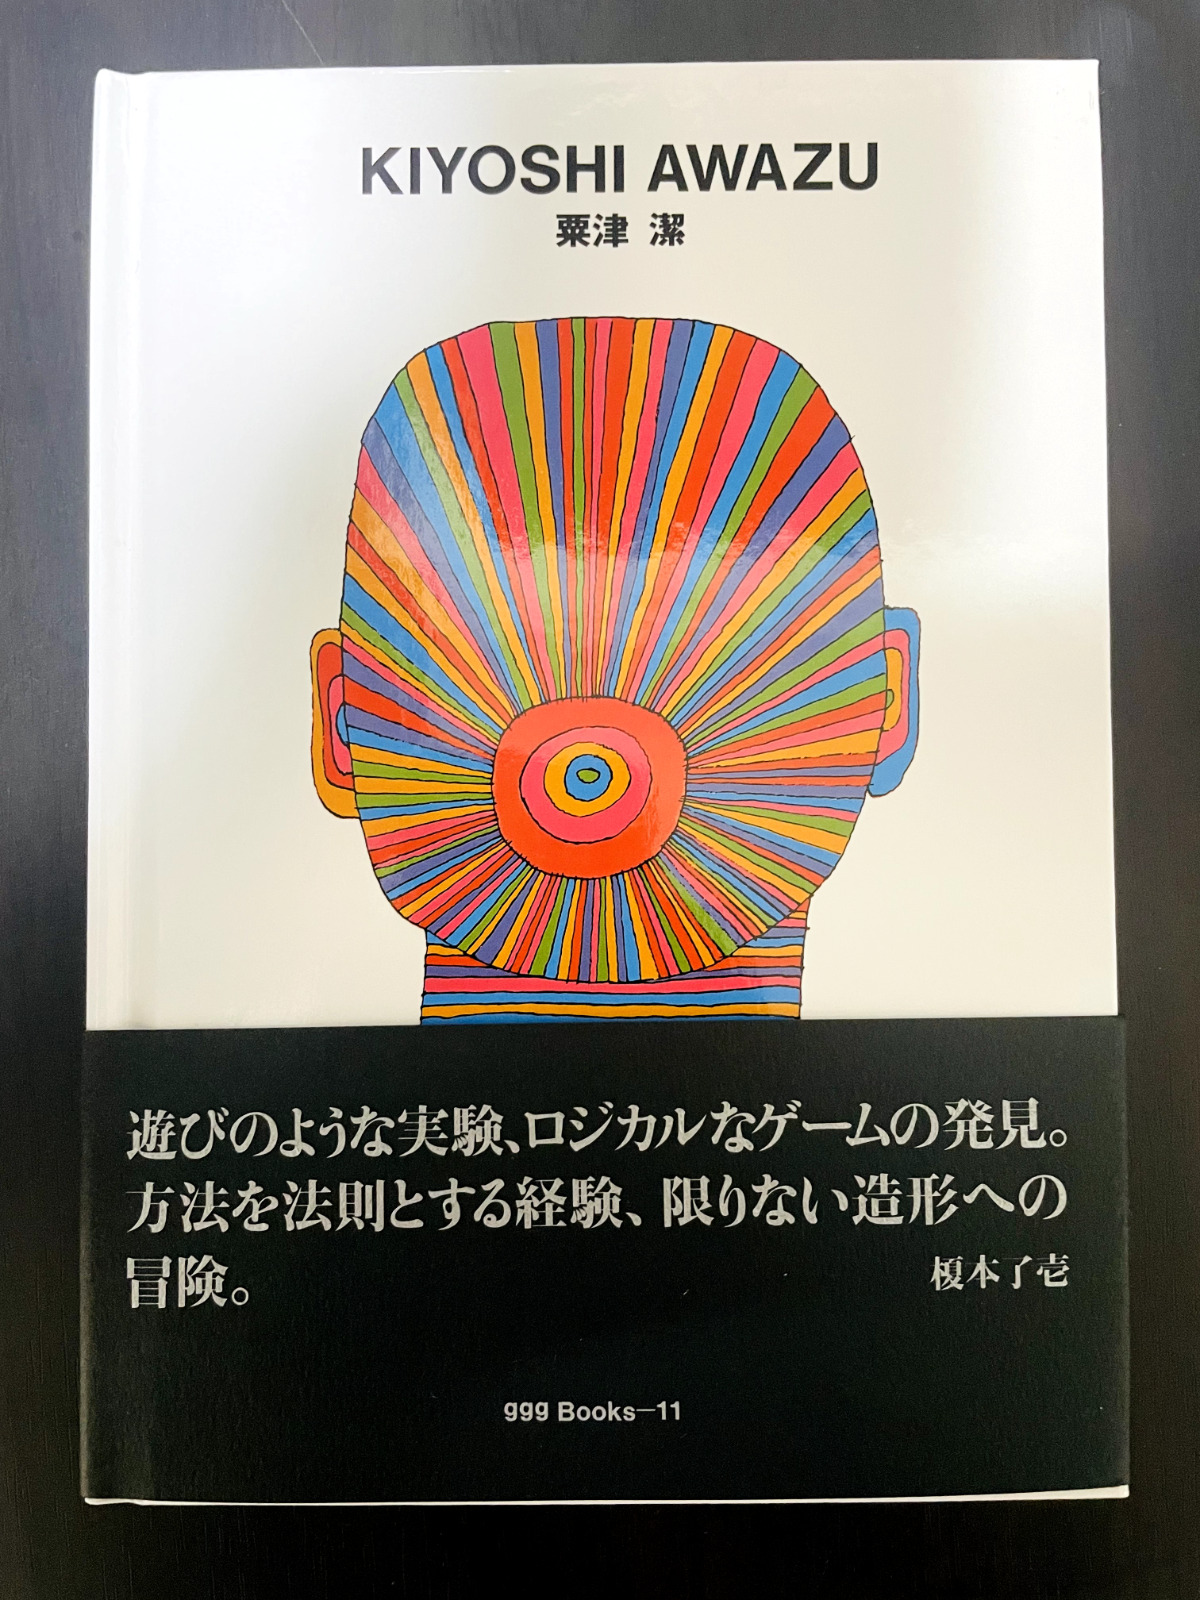 Kiyoshi Awazu ggg Books Vol.11 World Graphic Design Series 11 Art Book Used